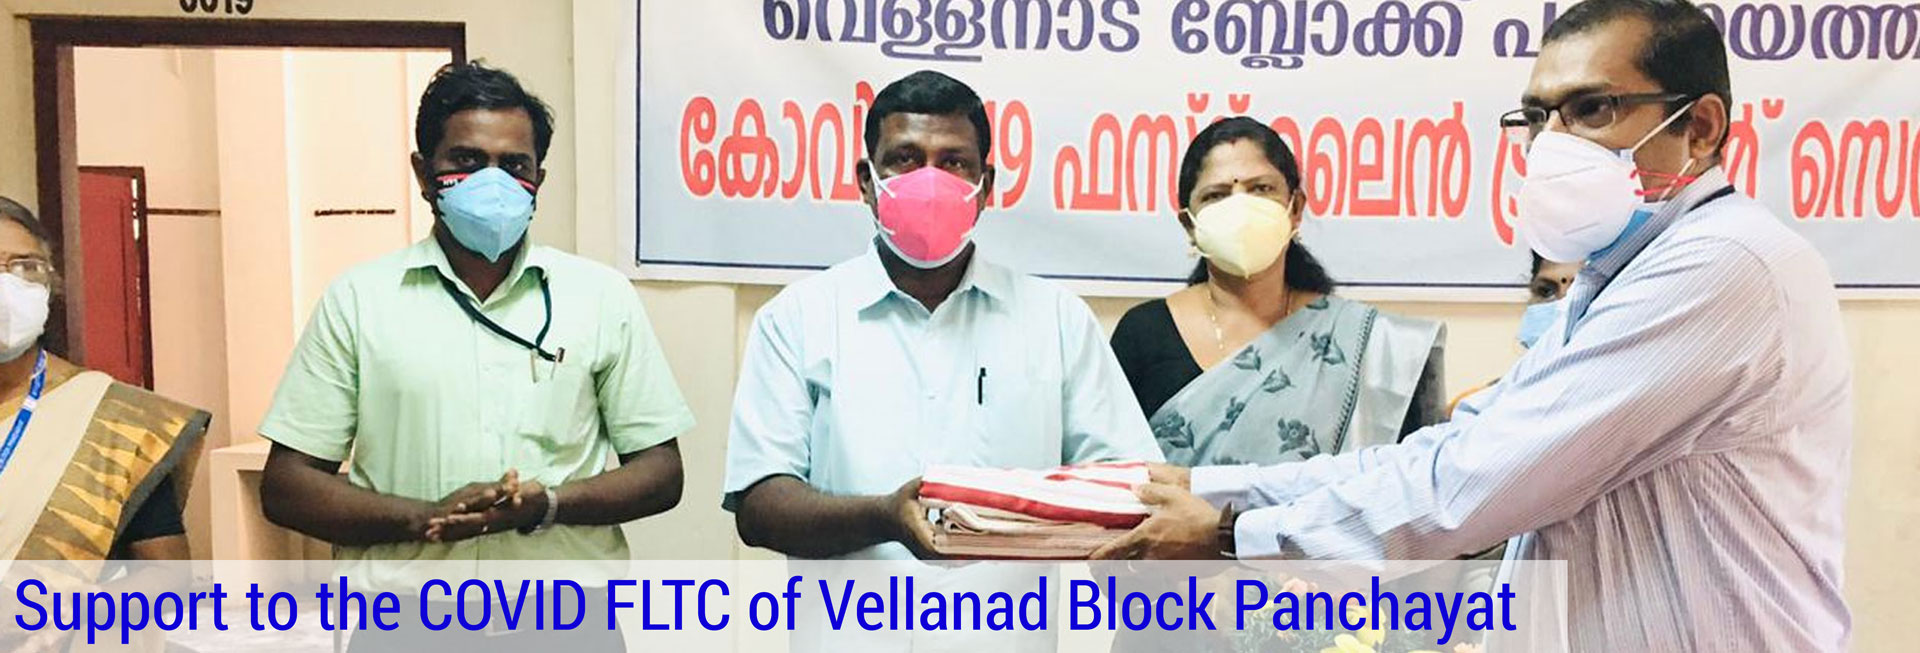 Support to FLTC of Vellanad Block Panchayat